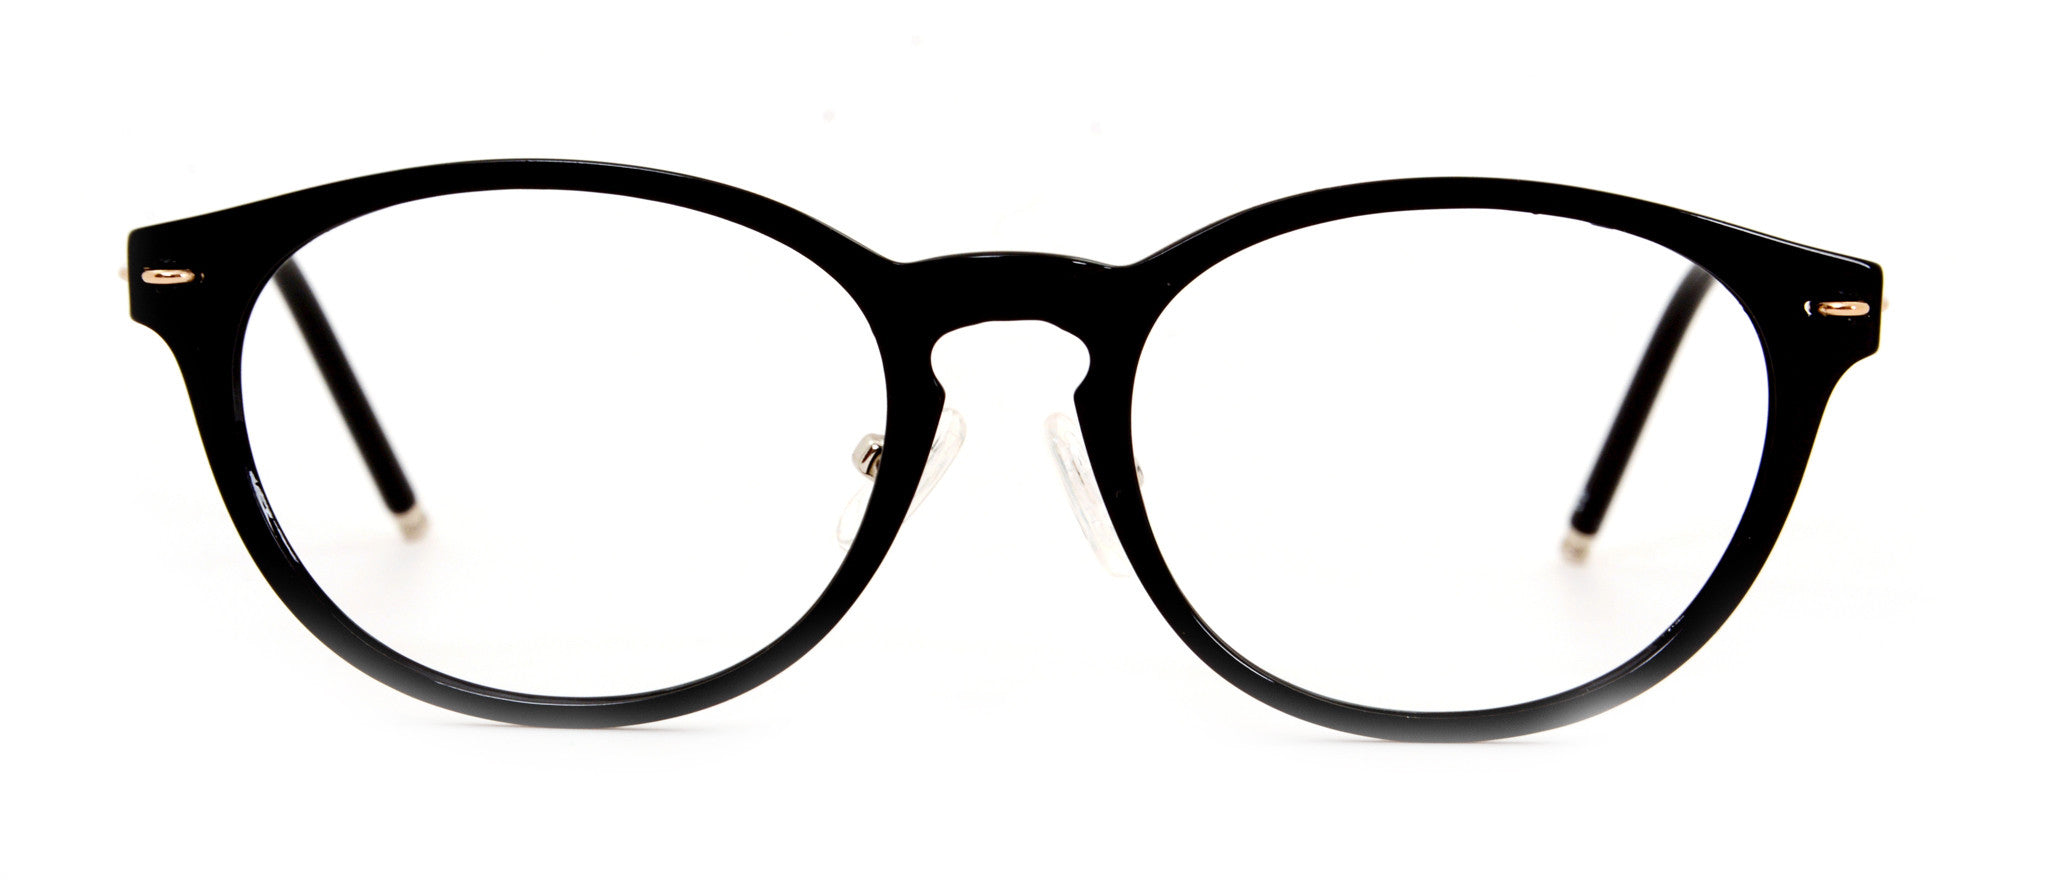 Circle | Sunglasses & Eyeglasses Prescription Frames Round Glasses